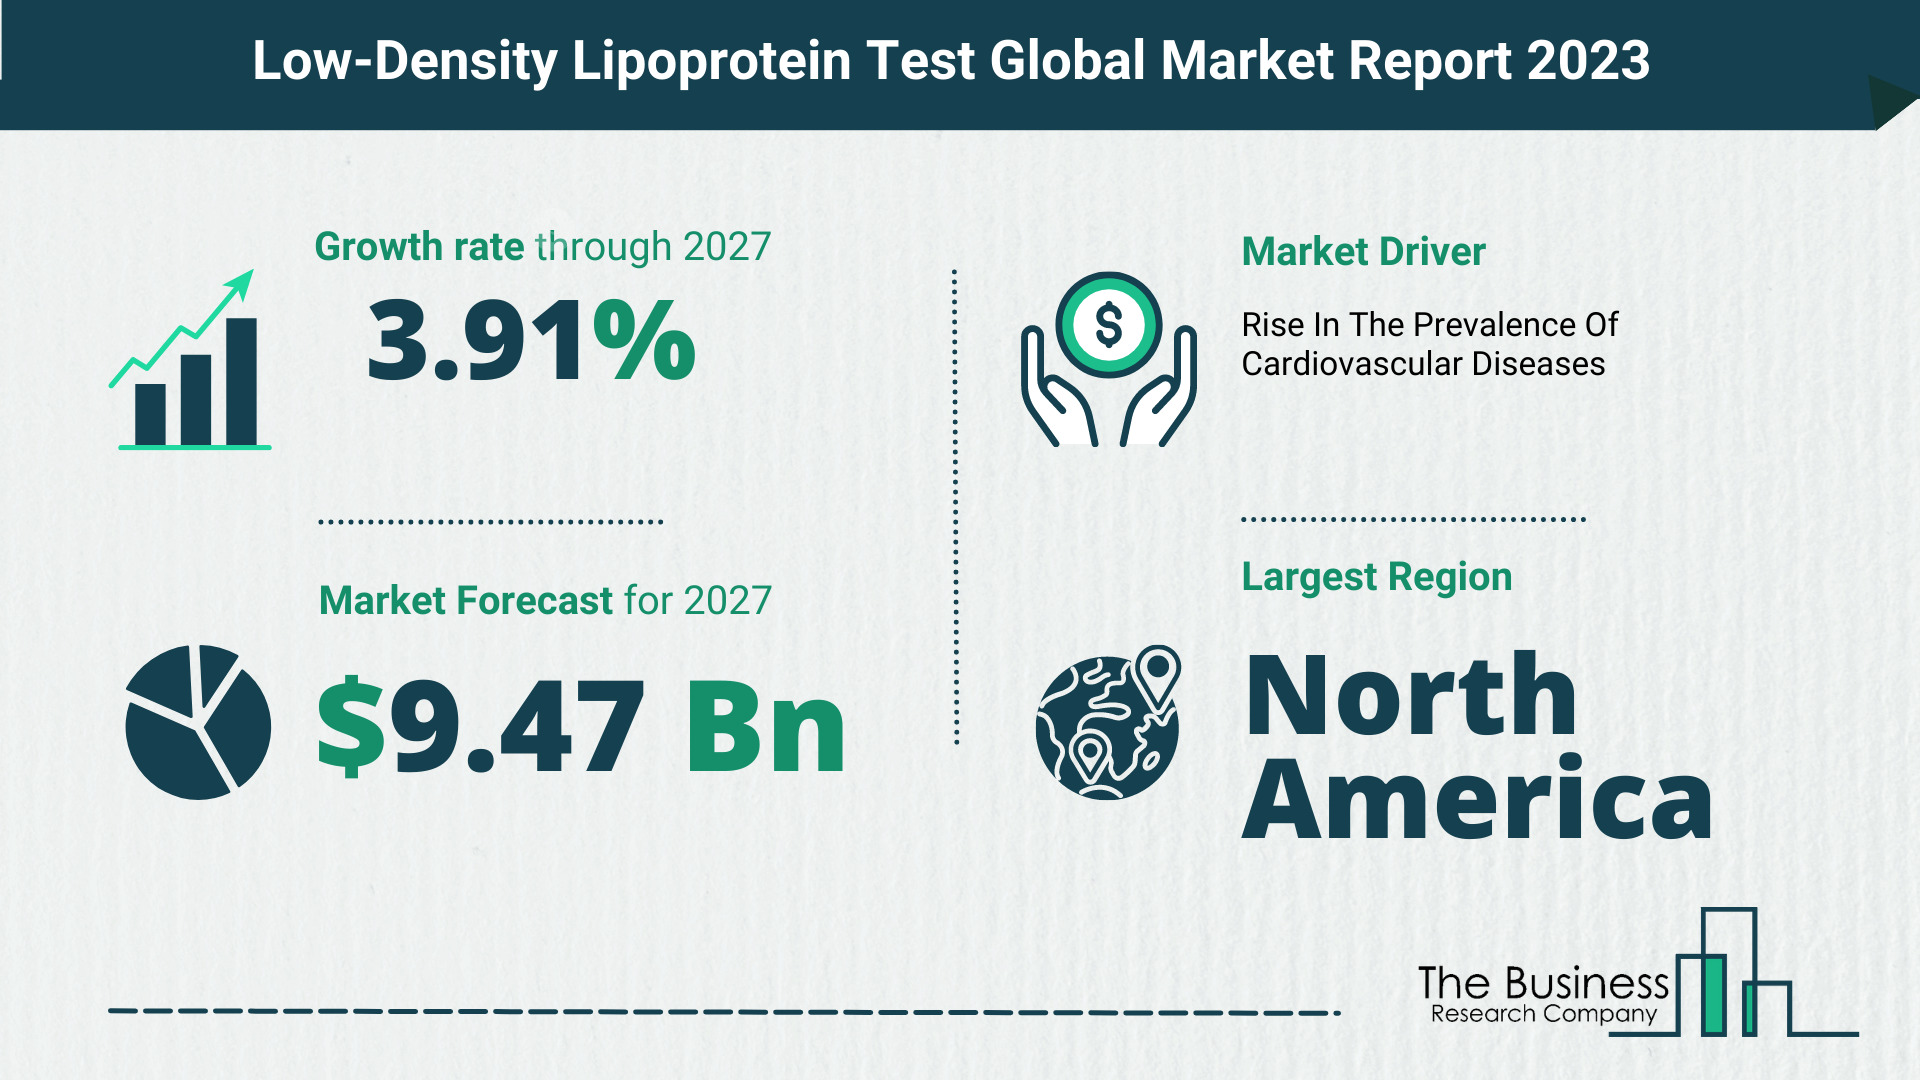 Global Low-Density Lipoprotein Test Market